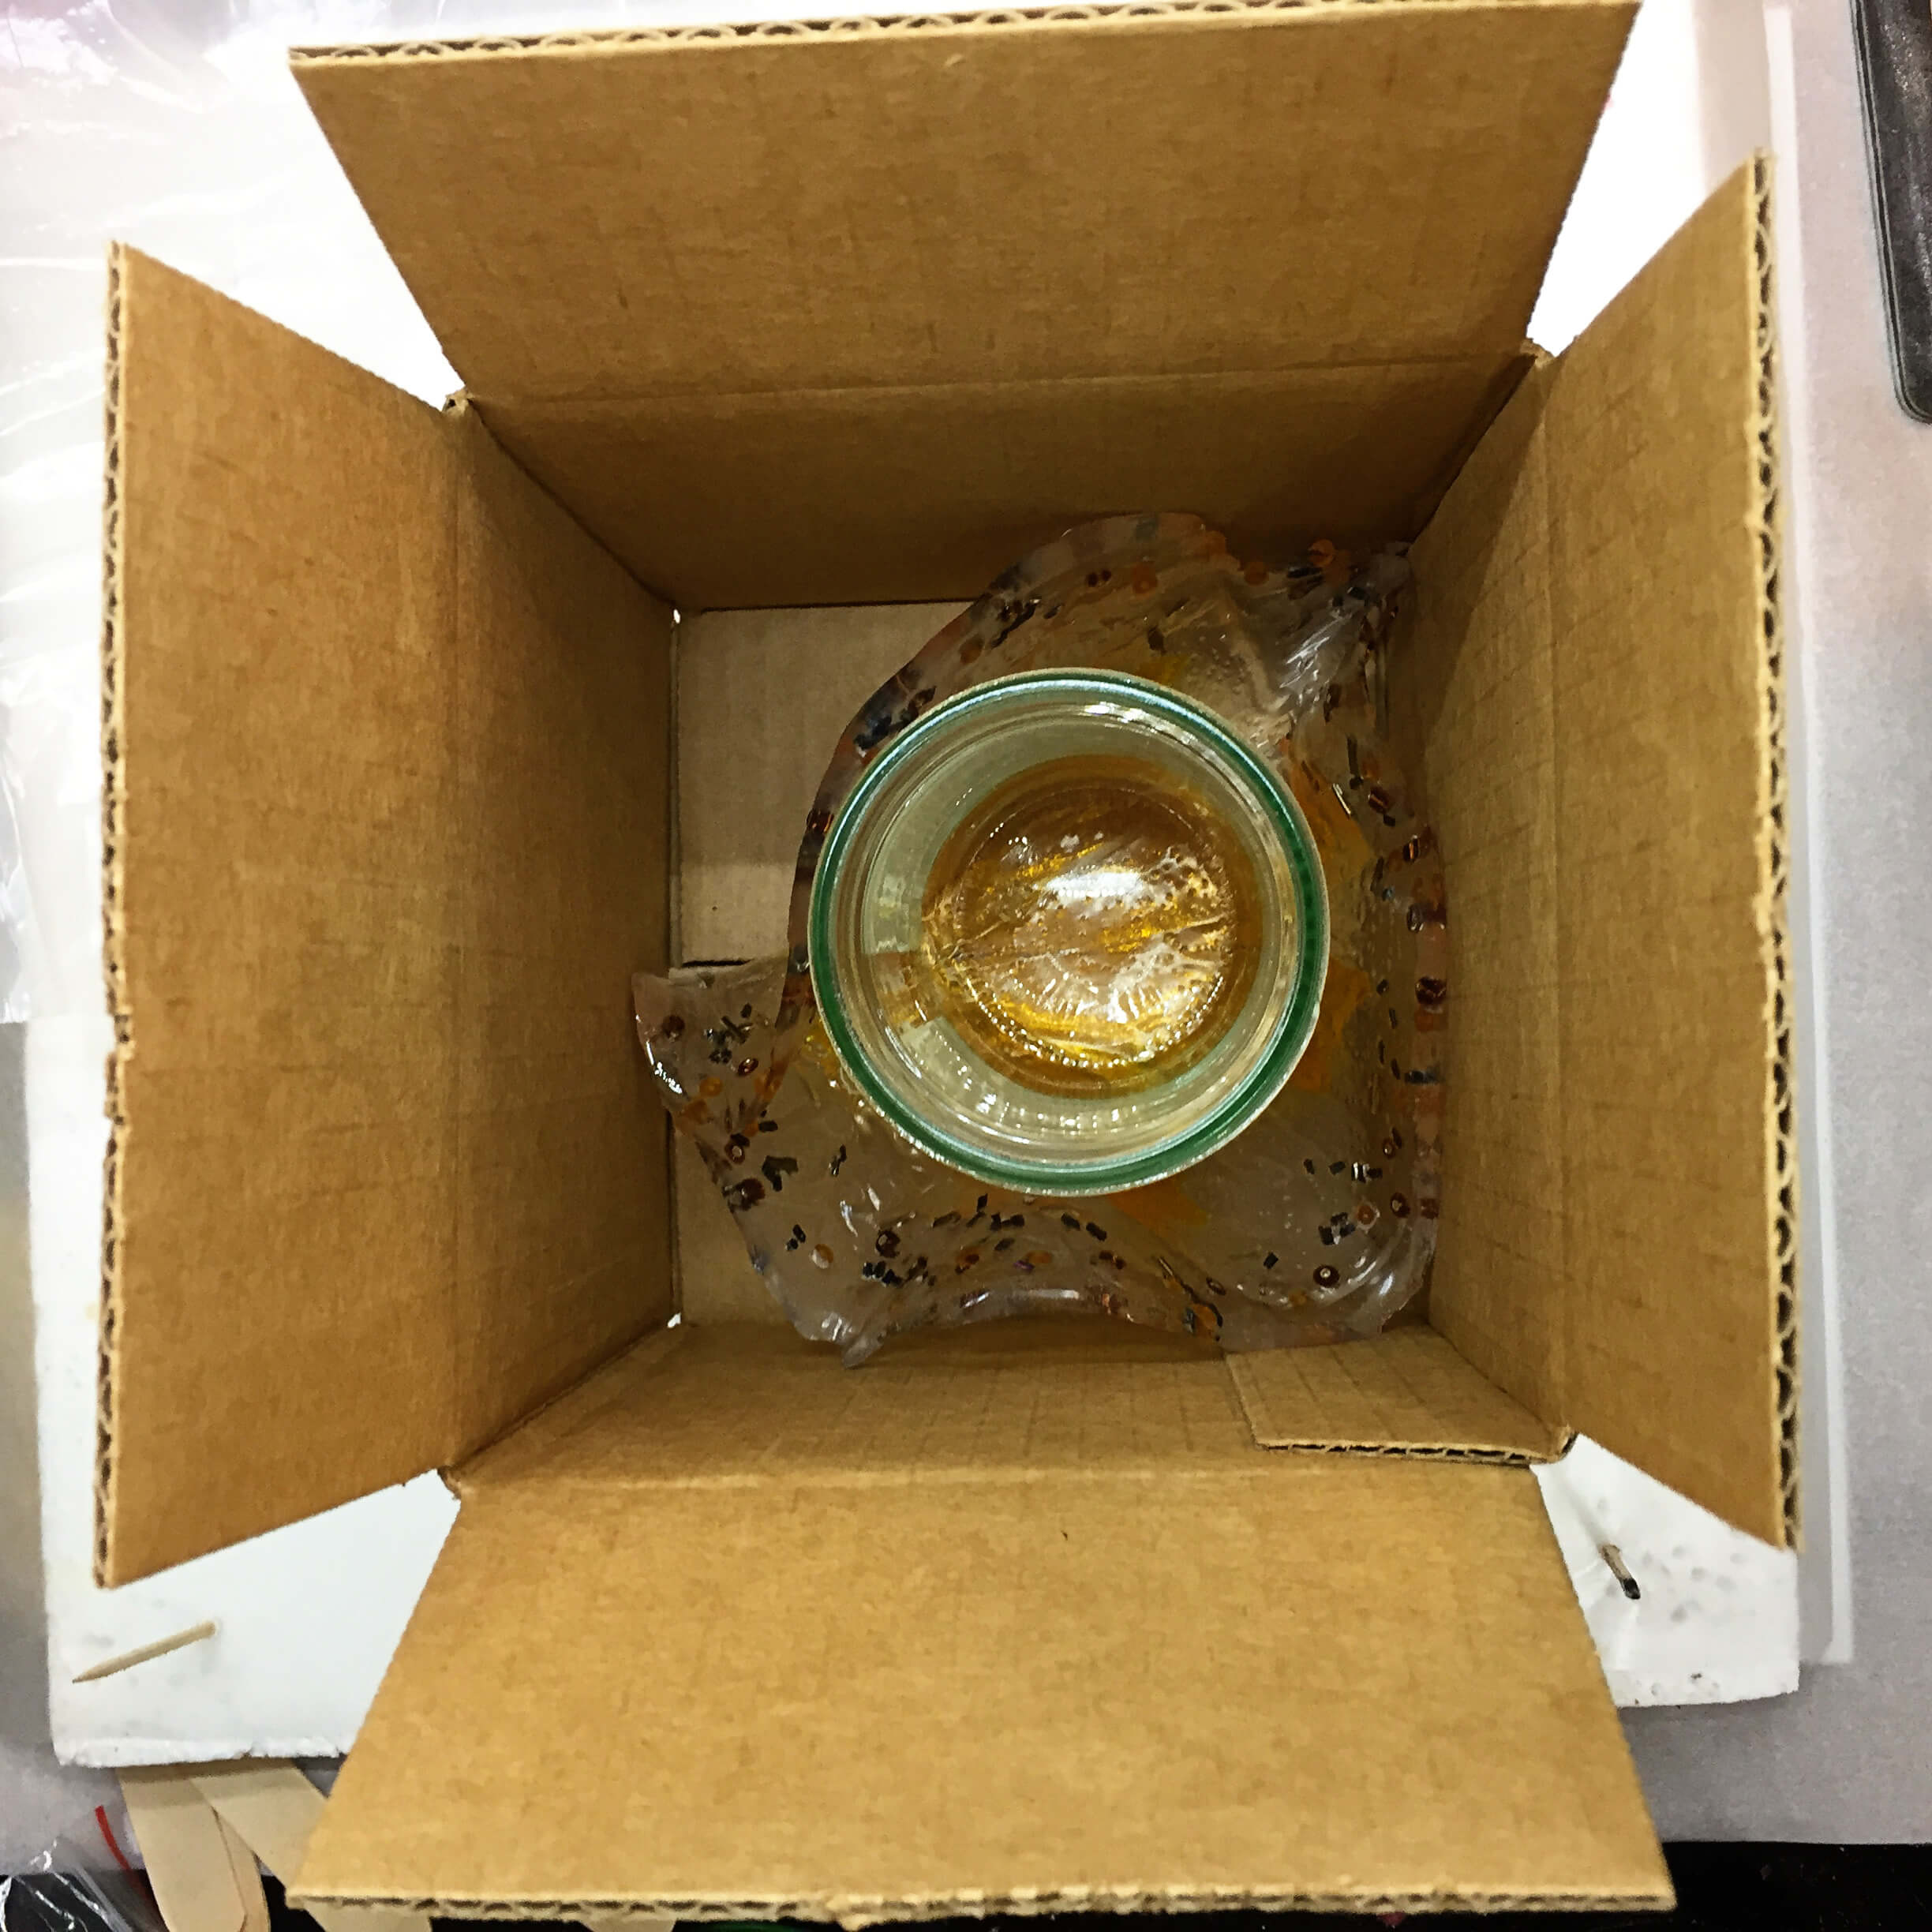 bending resin around jar in box